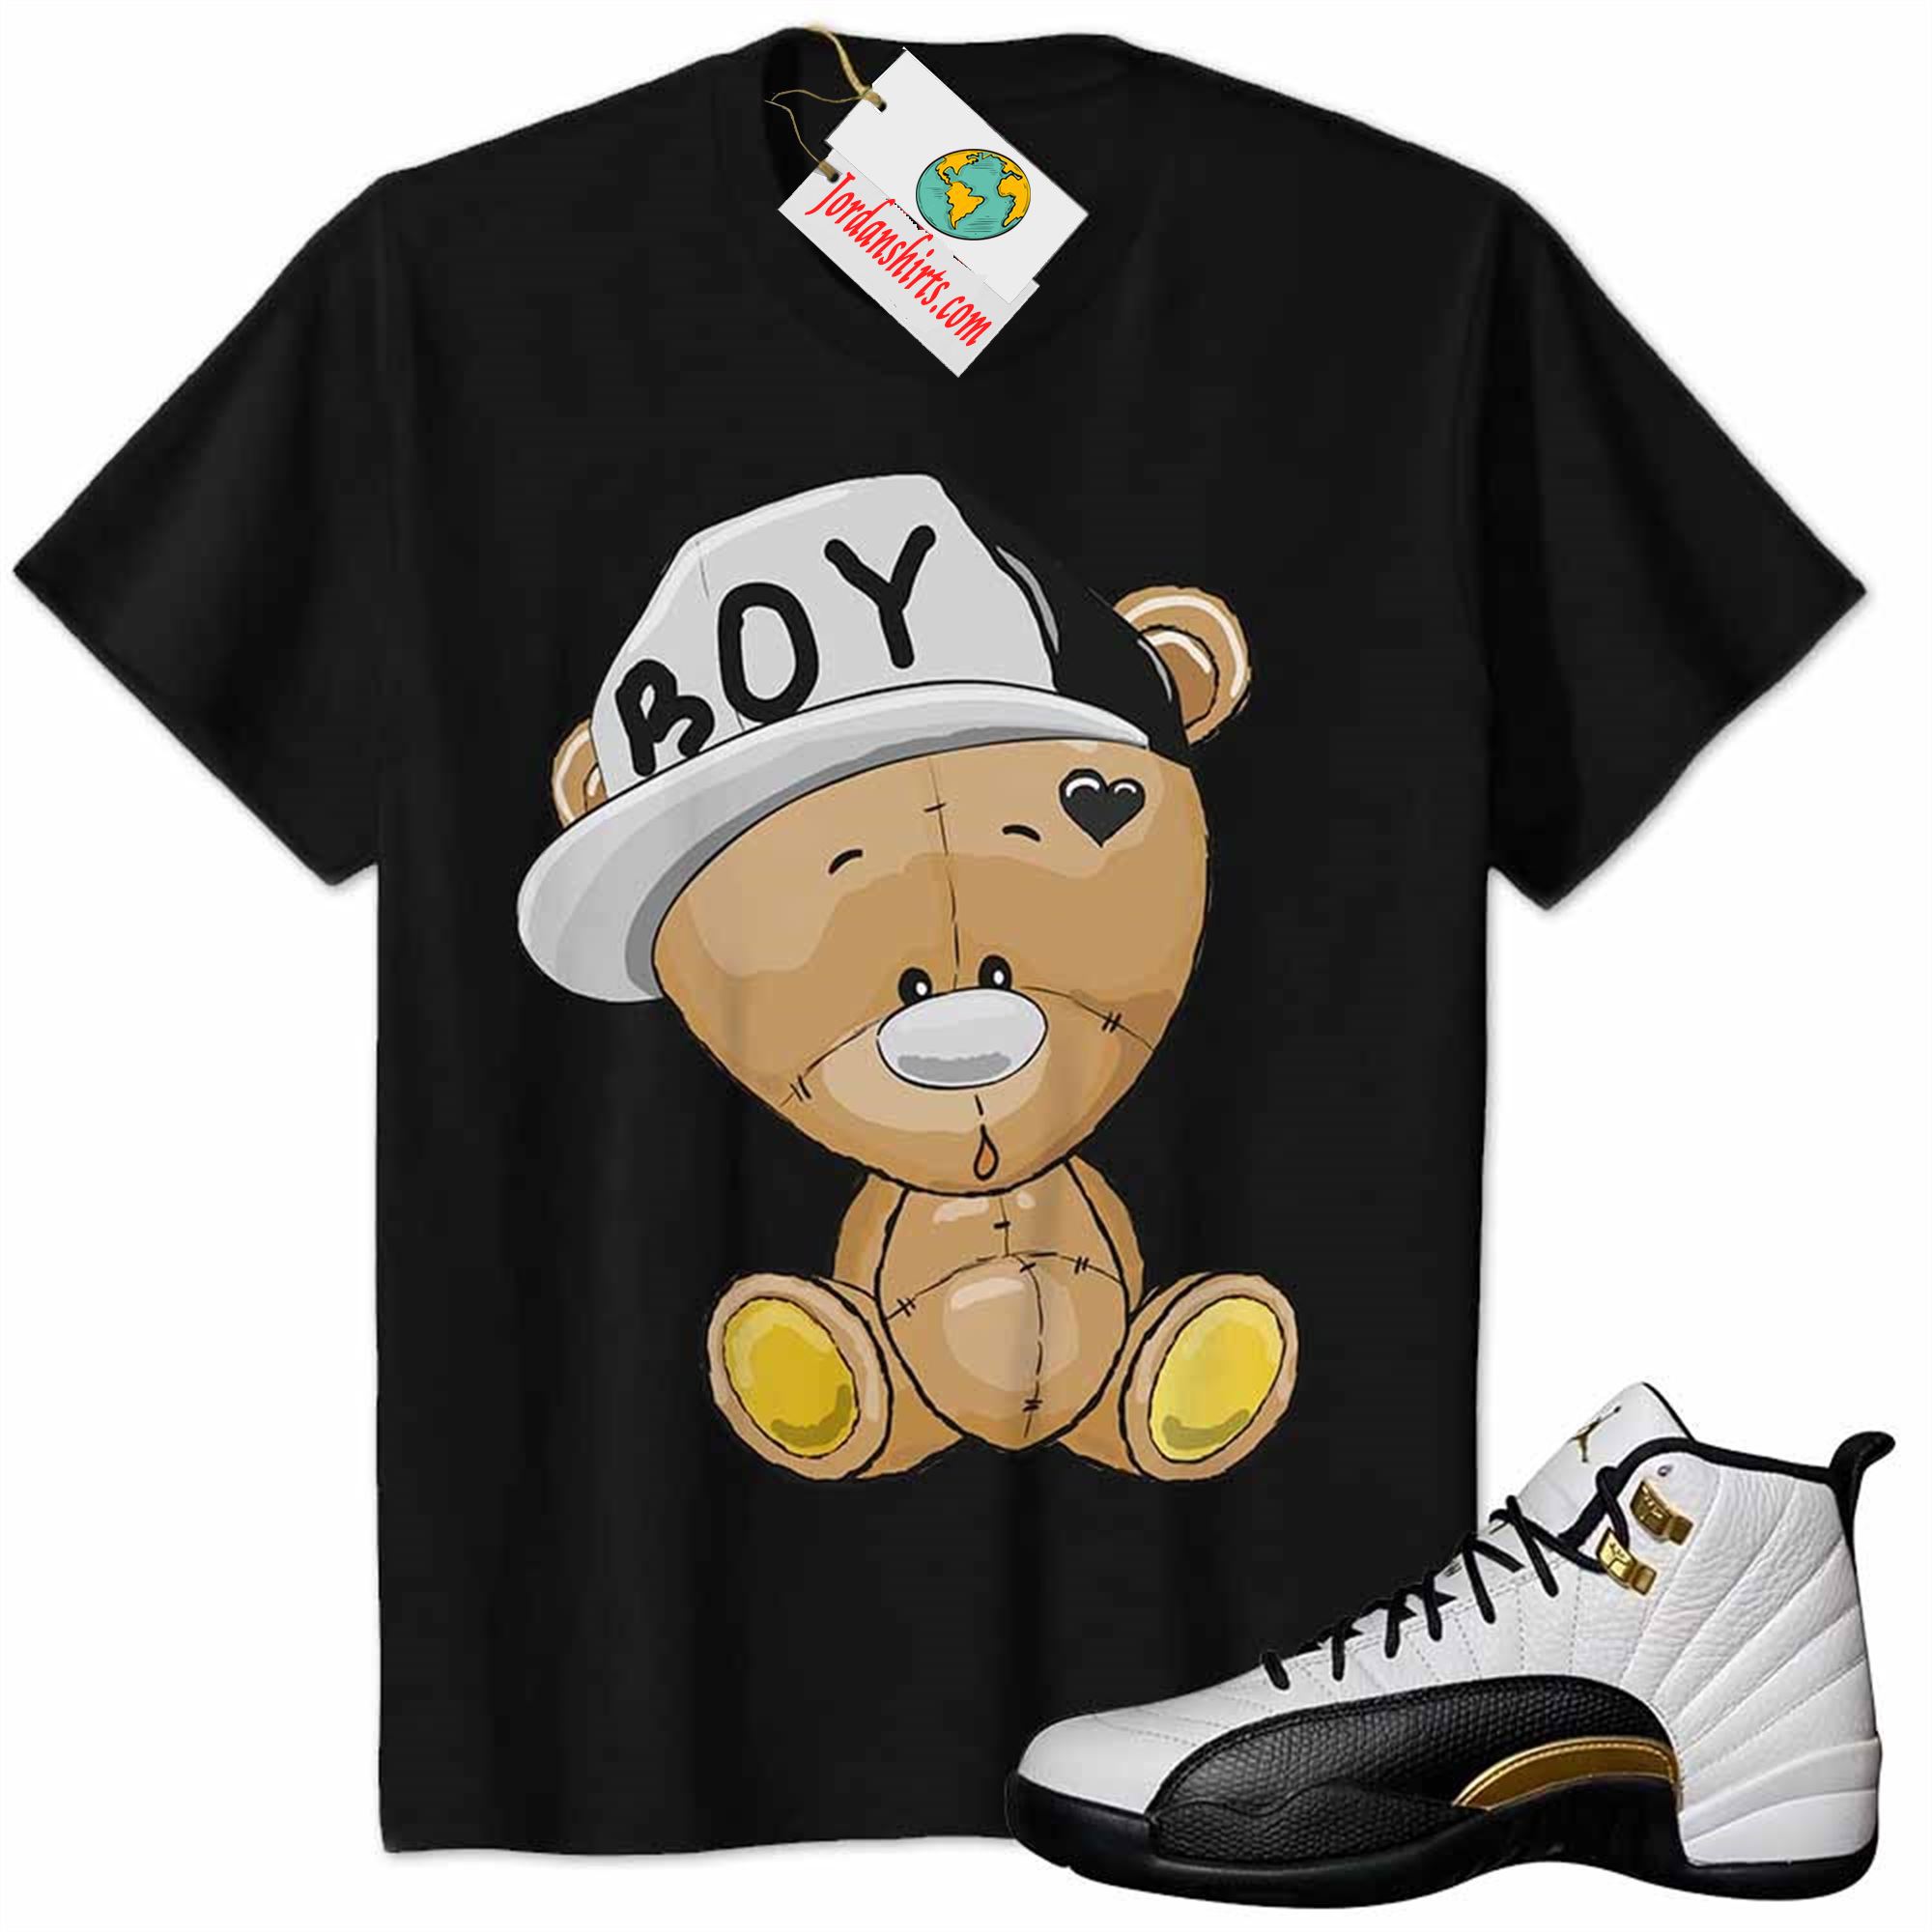 Jordan 12 Shirt, Jordan 12 Royalty Shirt Cute Baby Teddy Bear Black Full Size Up To 5xl